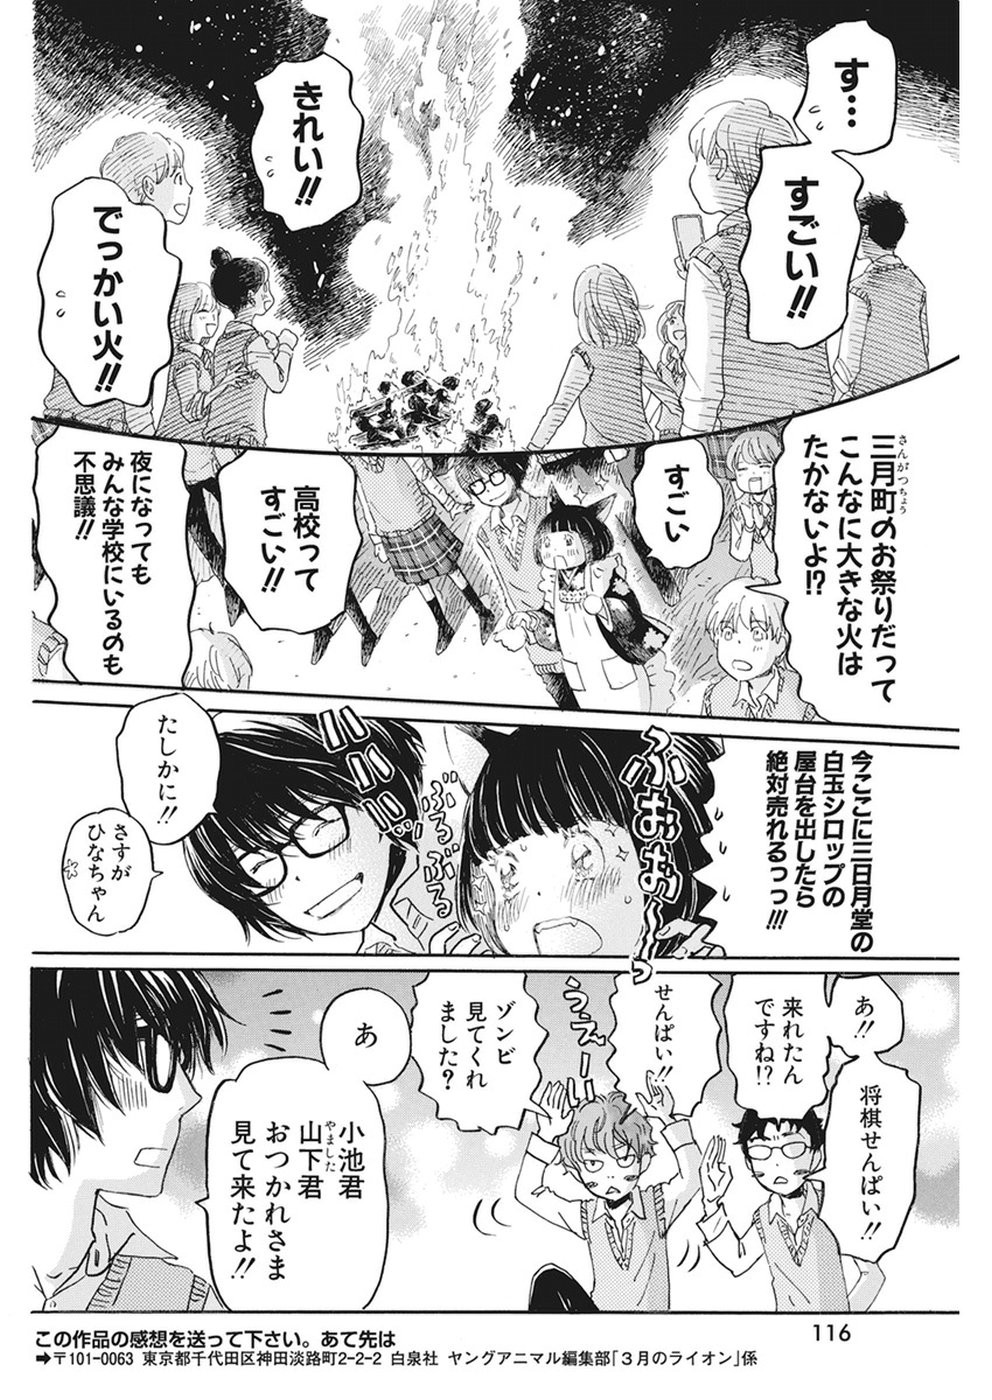 3 Gatsu no Lion - Chapter 154 - Page 5